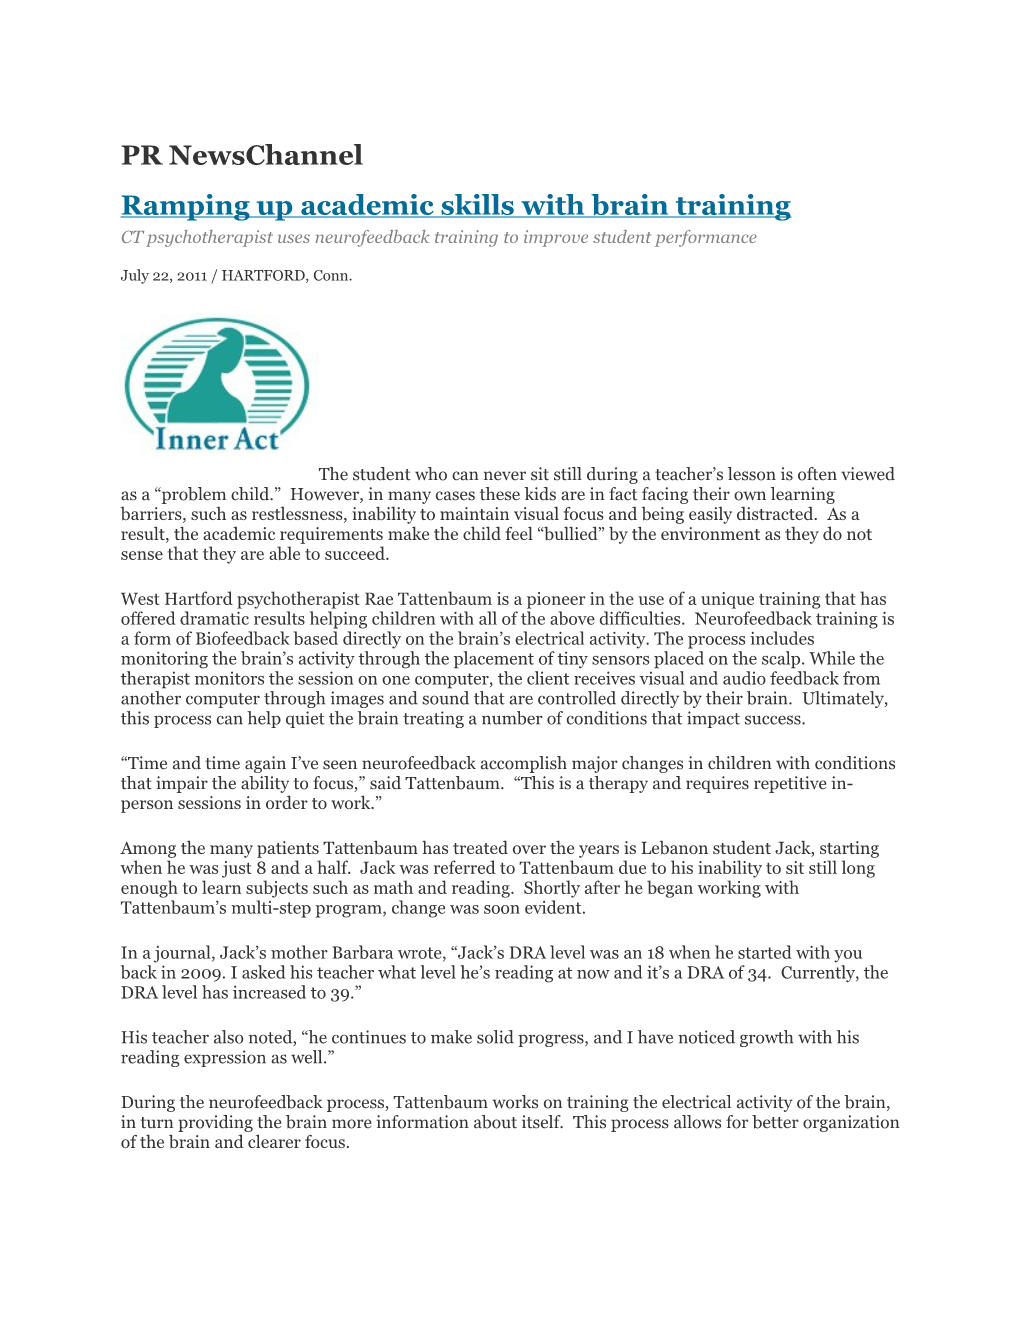 Ramping up Academic Skills with Brain Training